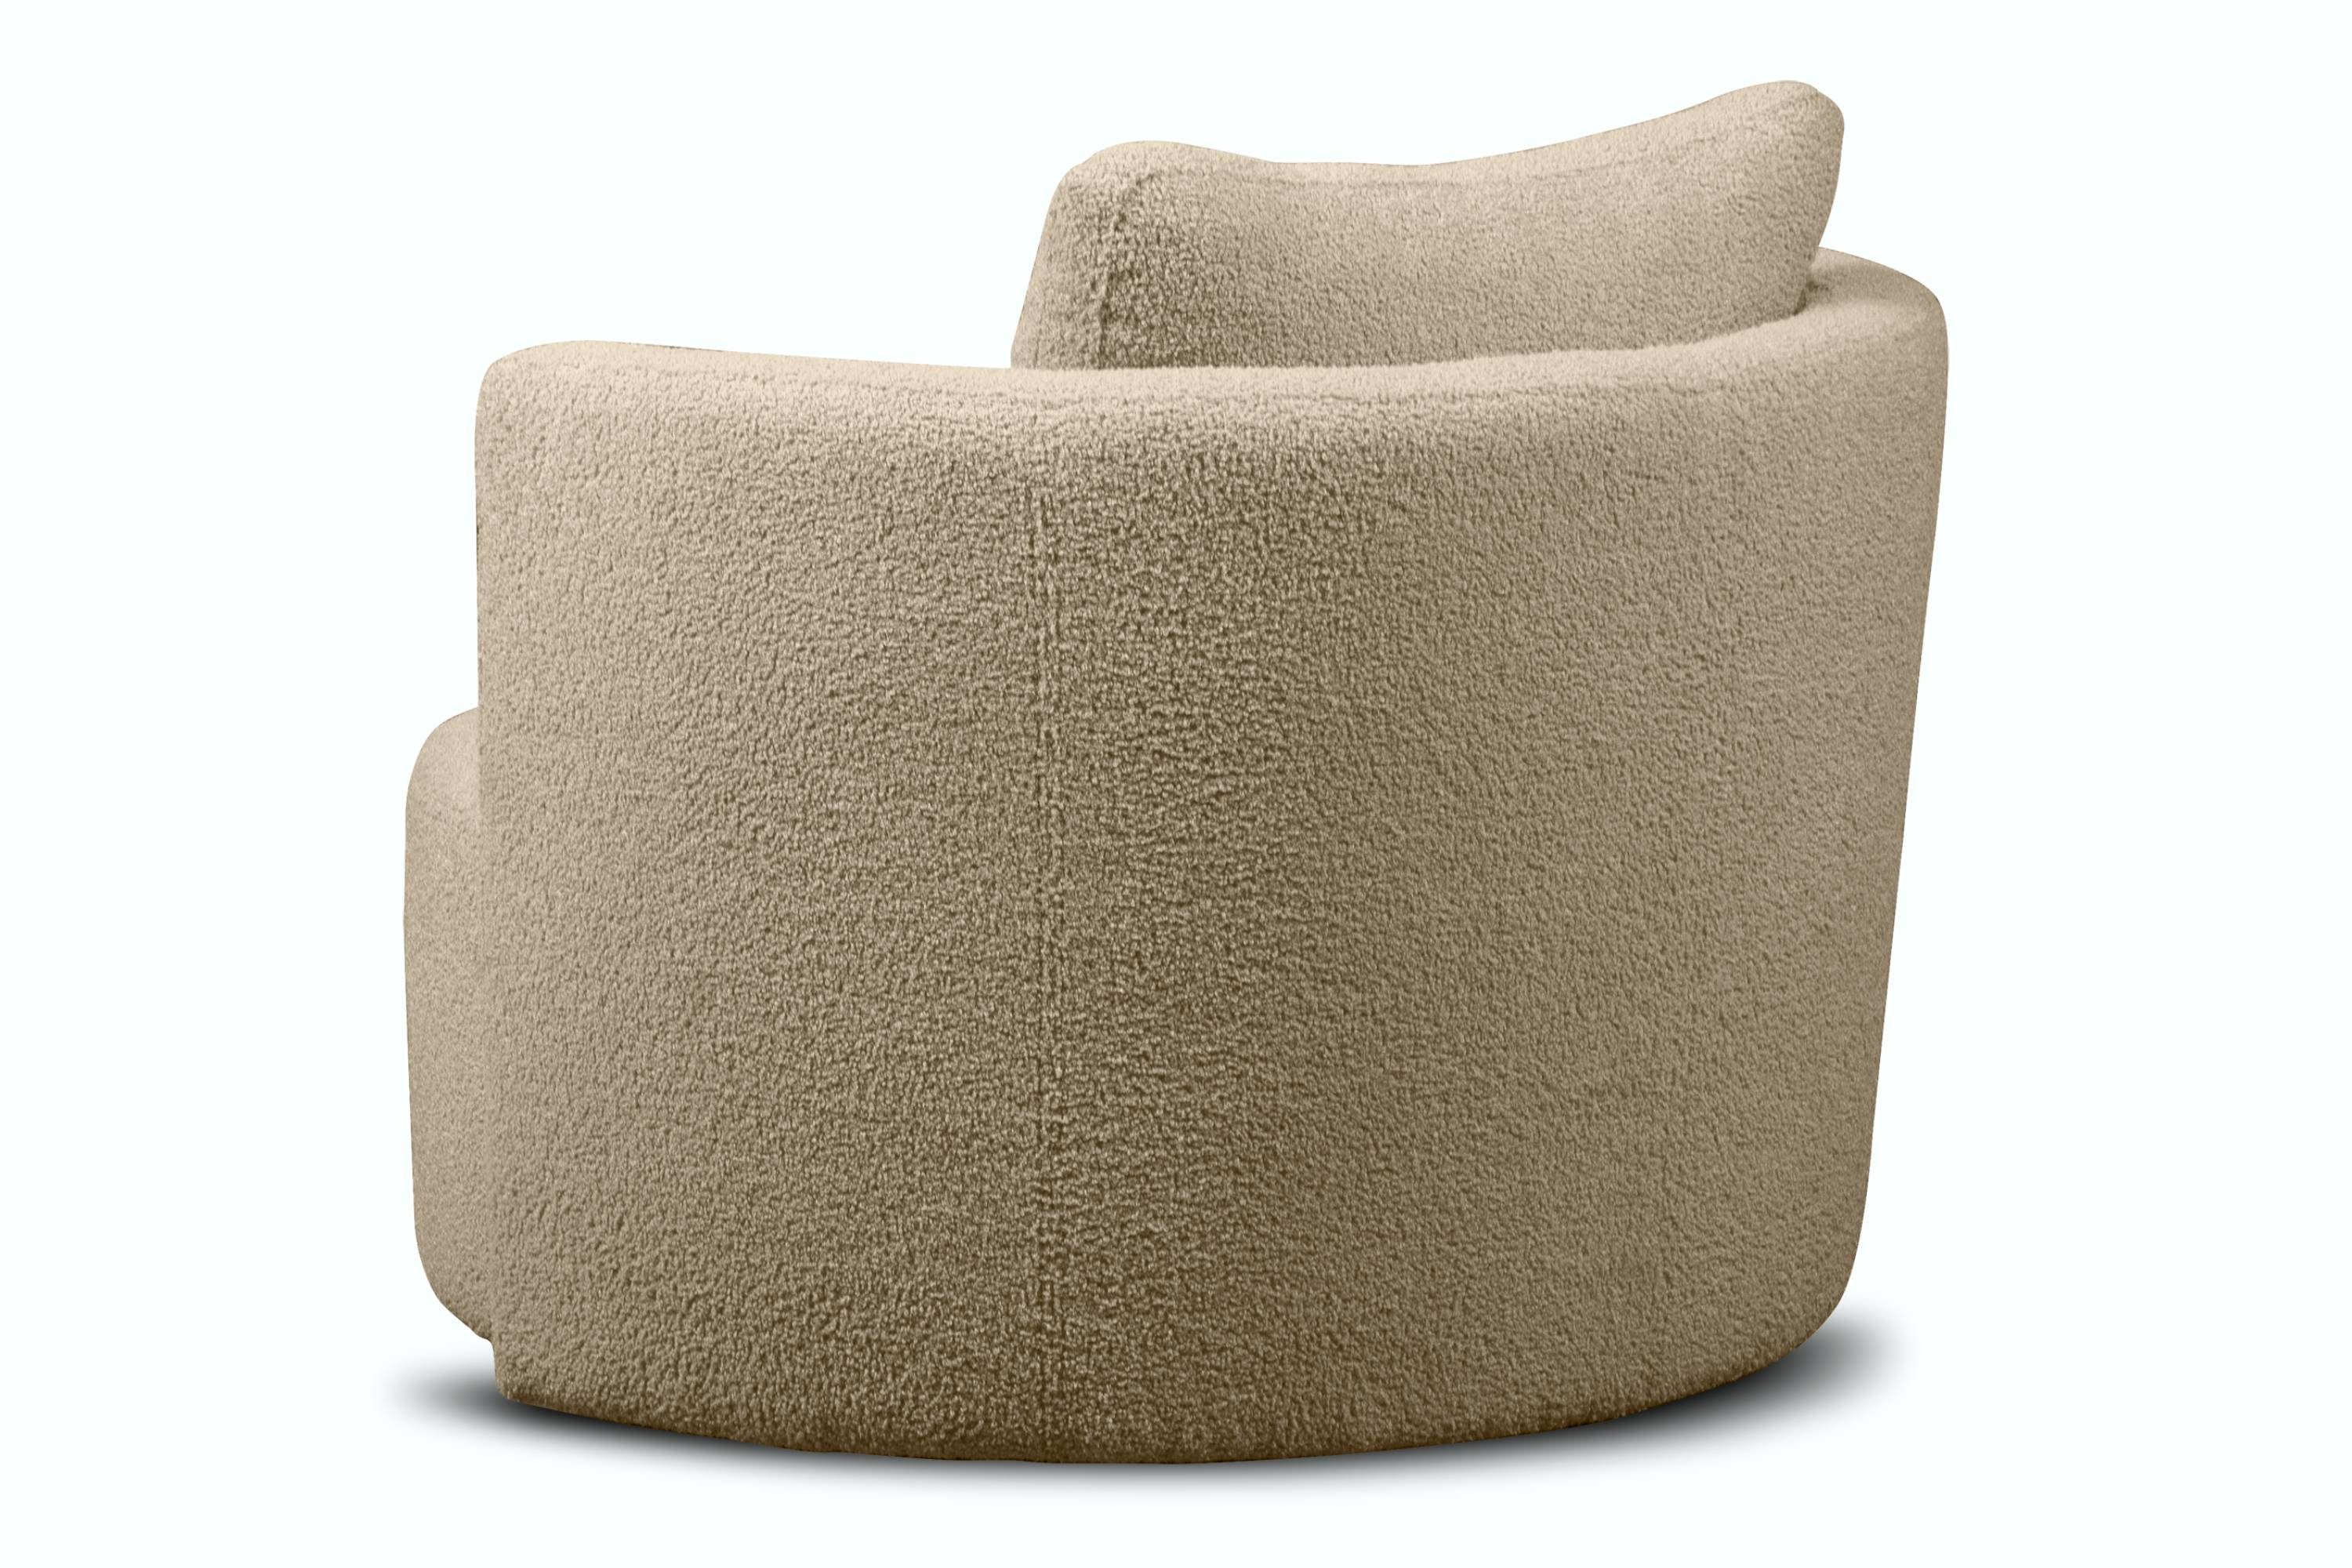 Konsimo Drehsessel RAGGI Sessel Sitzhocker, komfortables mit Drehfunktion, 360° mit Bouclé-Stoff, Sitzen